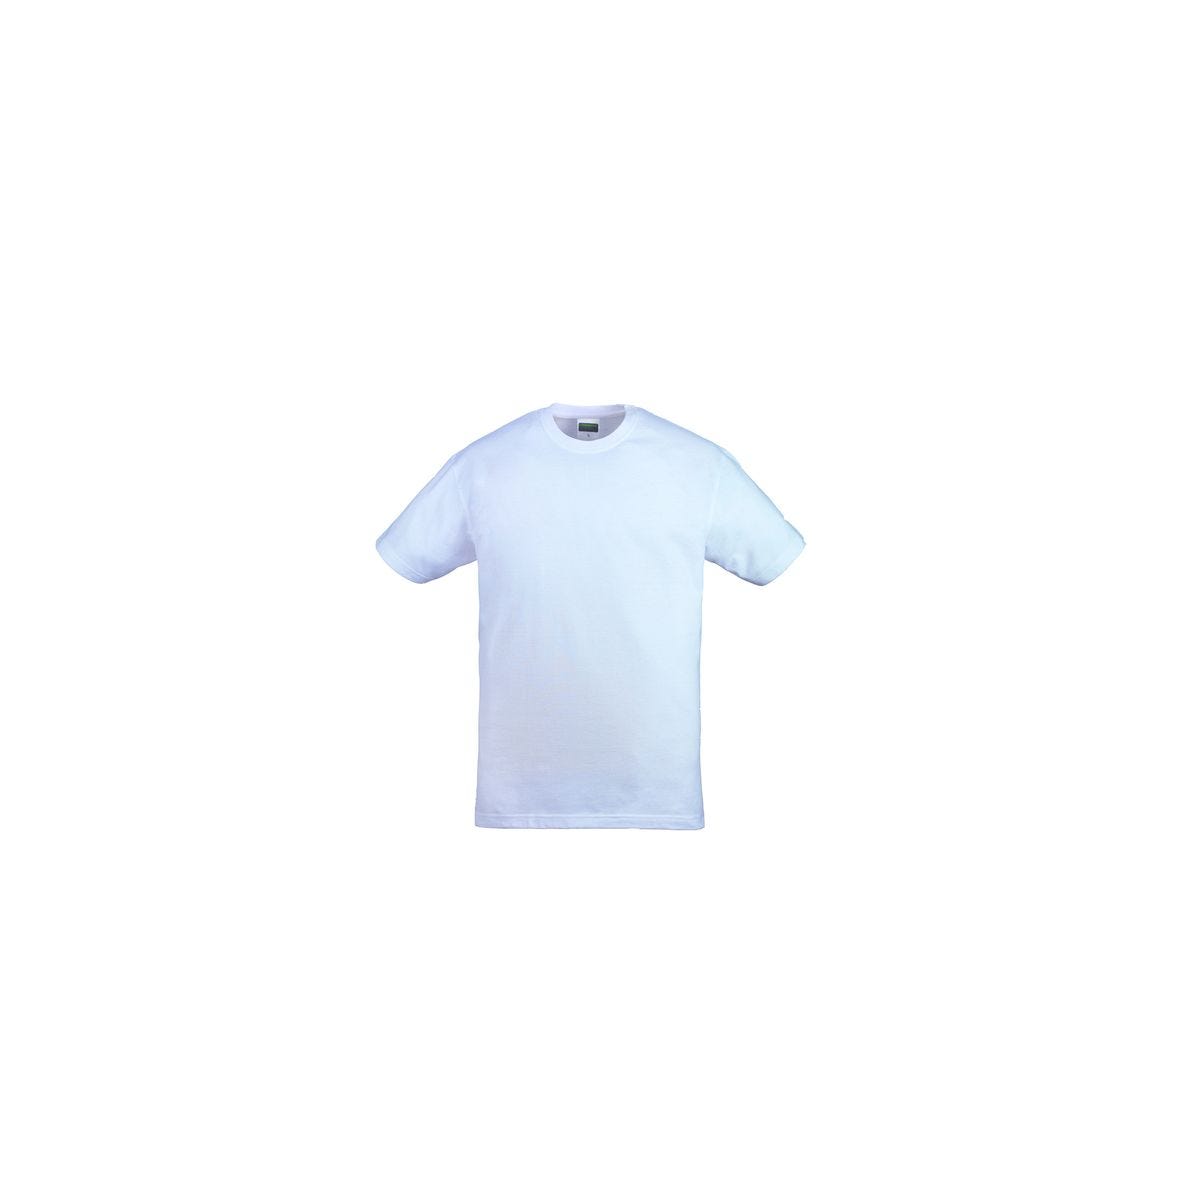 T-shirt TRIP MC blanc - COVERGUARD - Taille L 0